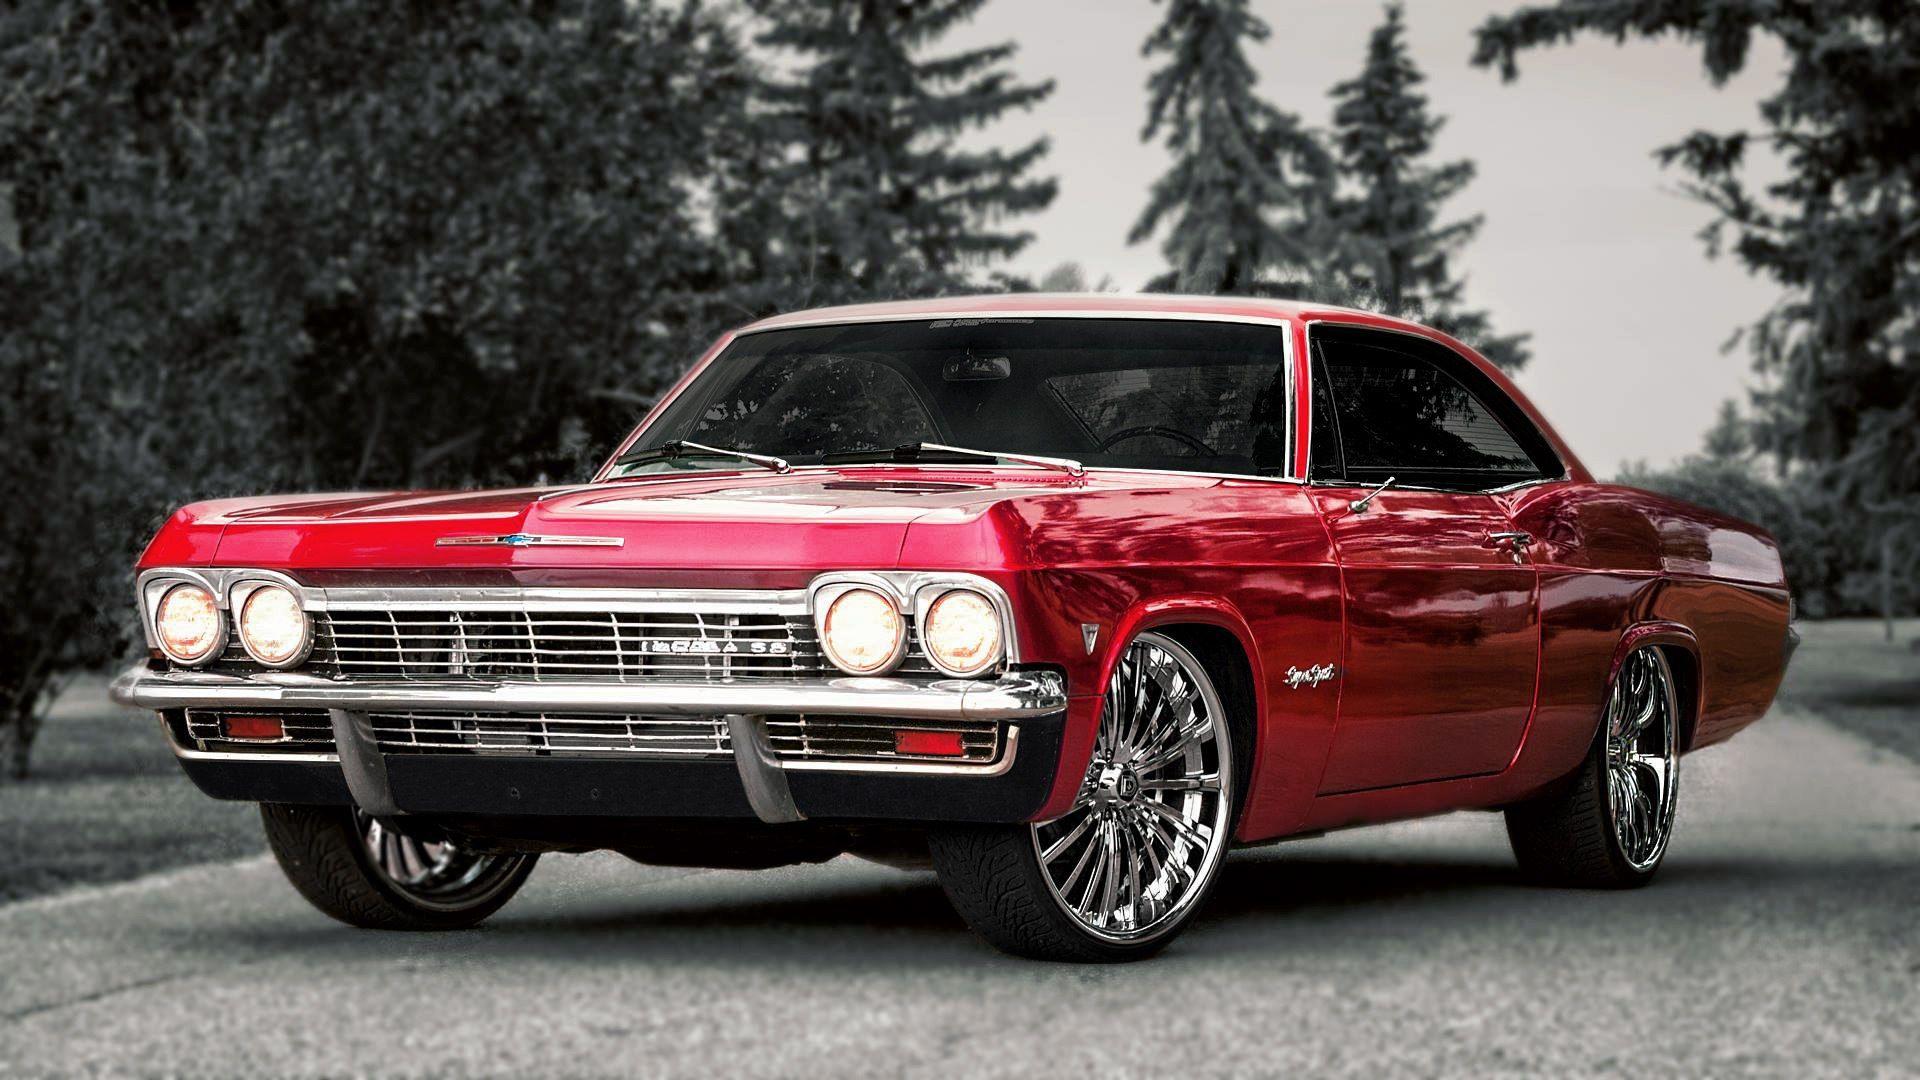 Impala Wallpaper, Fantastic Impala Image High Resolution